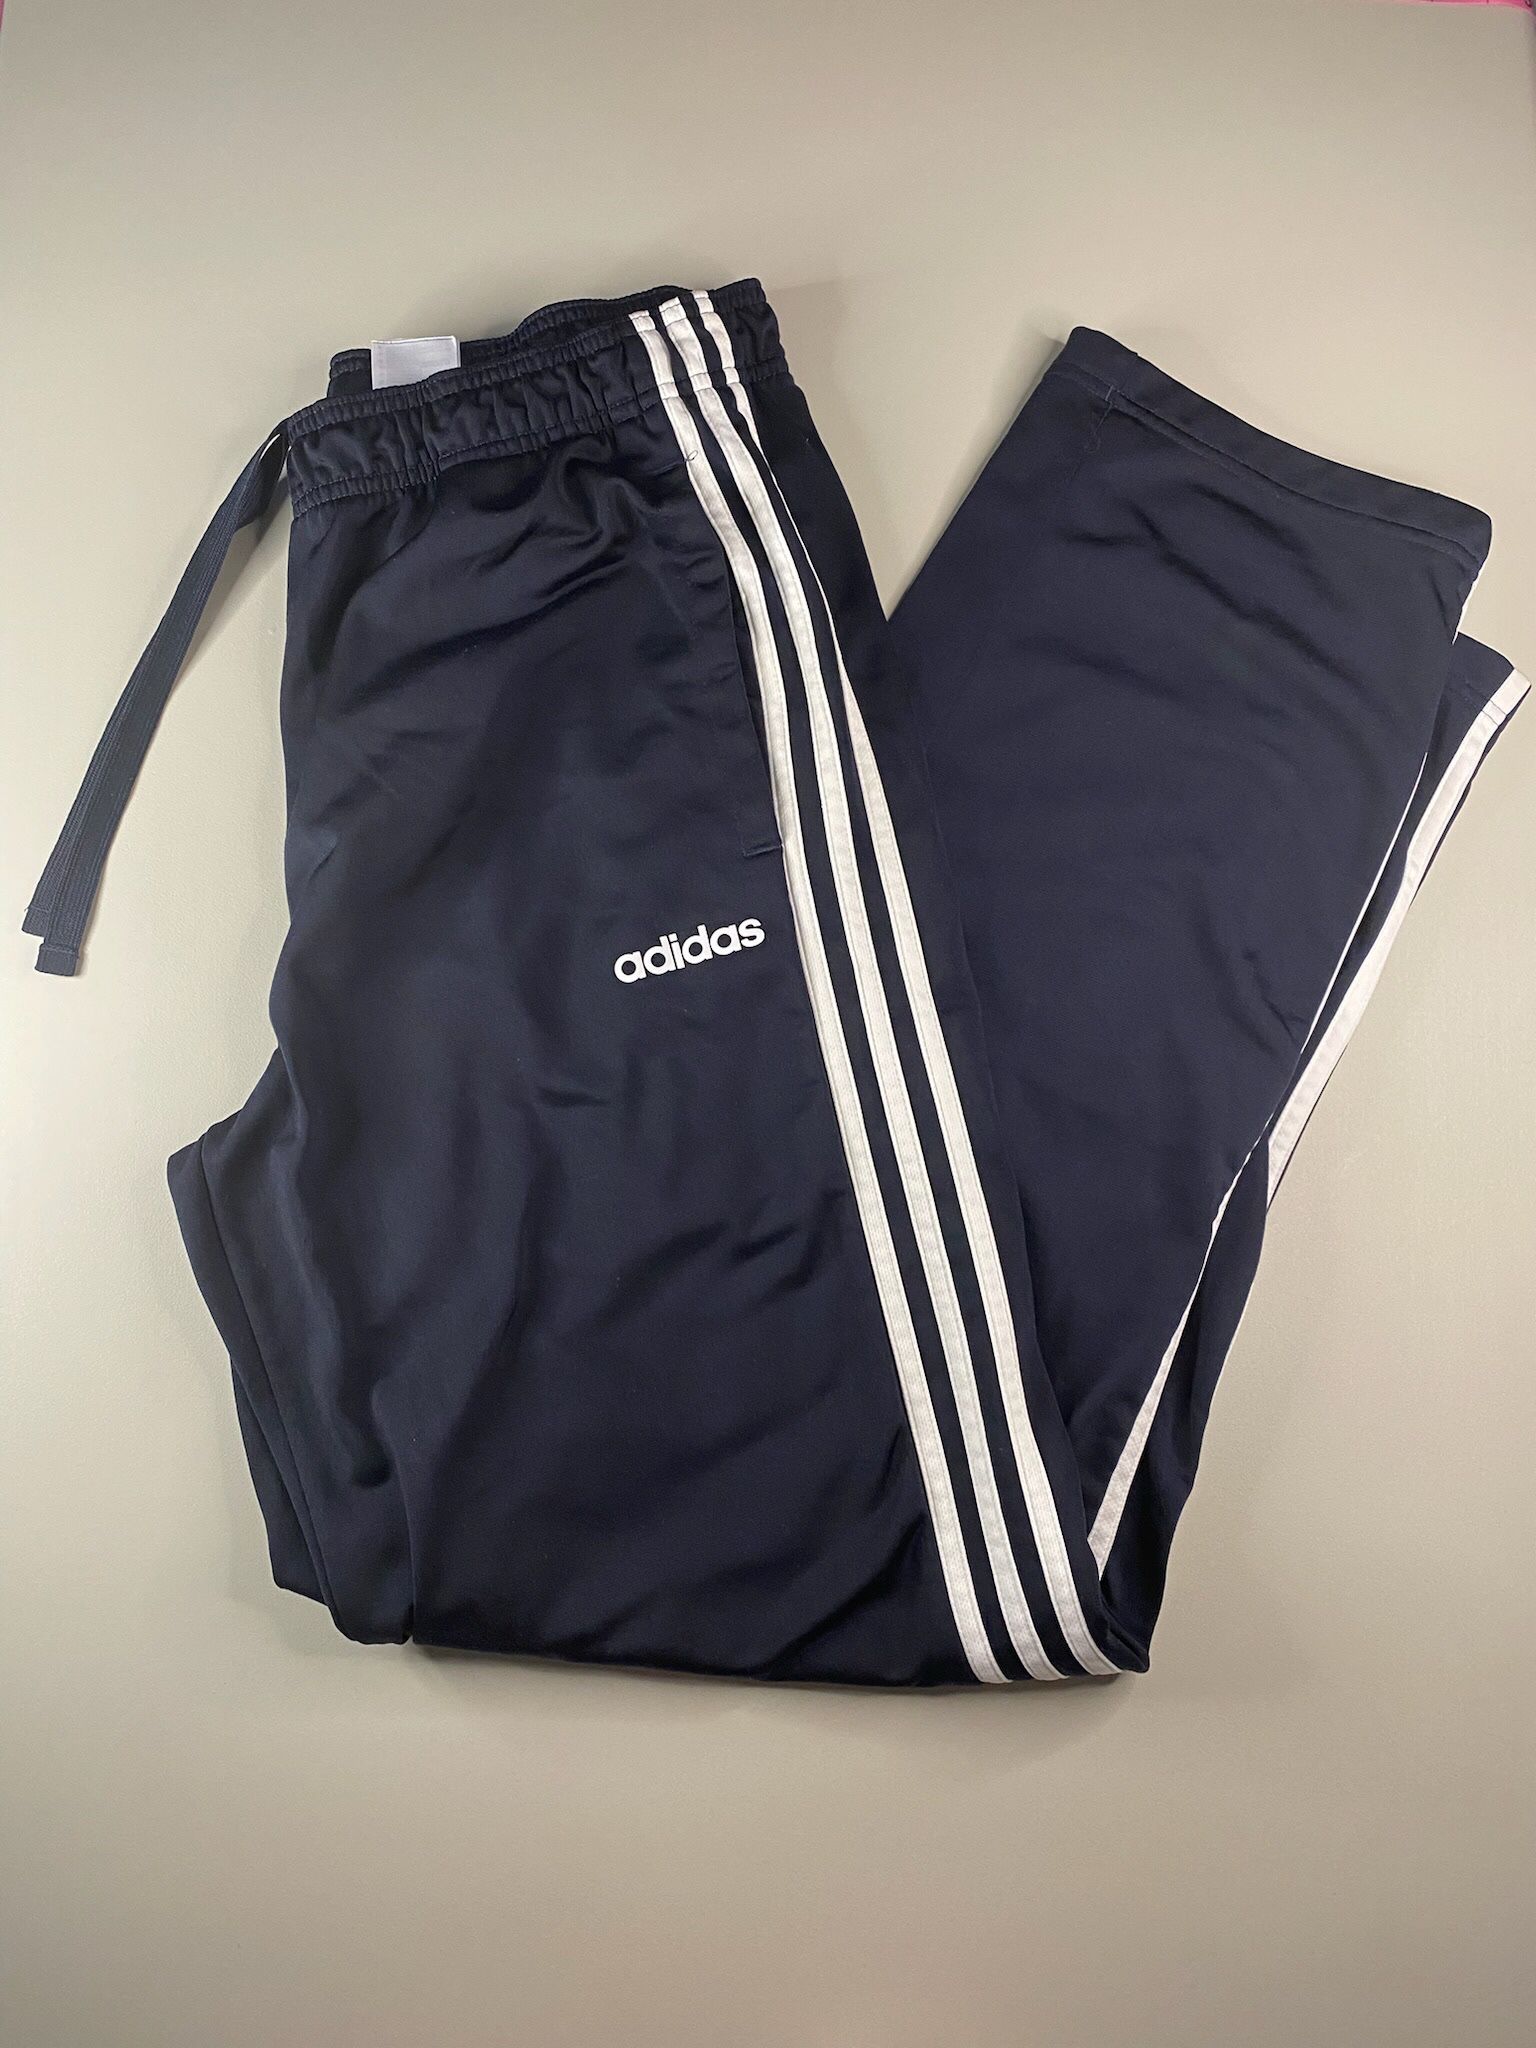 Adidas Men’s Blue With Stripes  Large Sweatpant